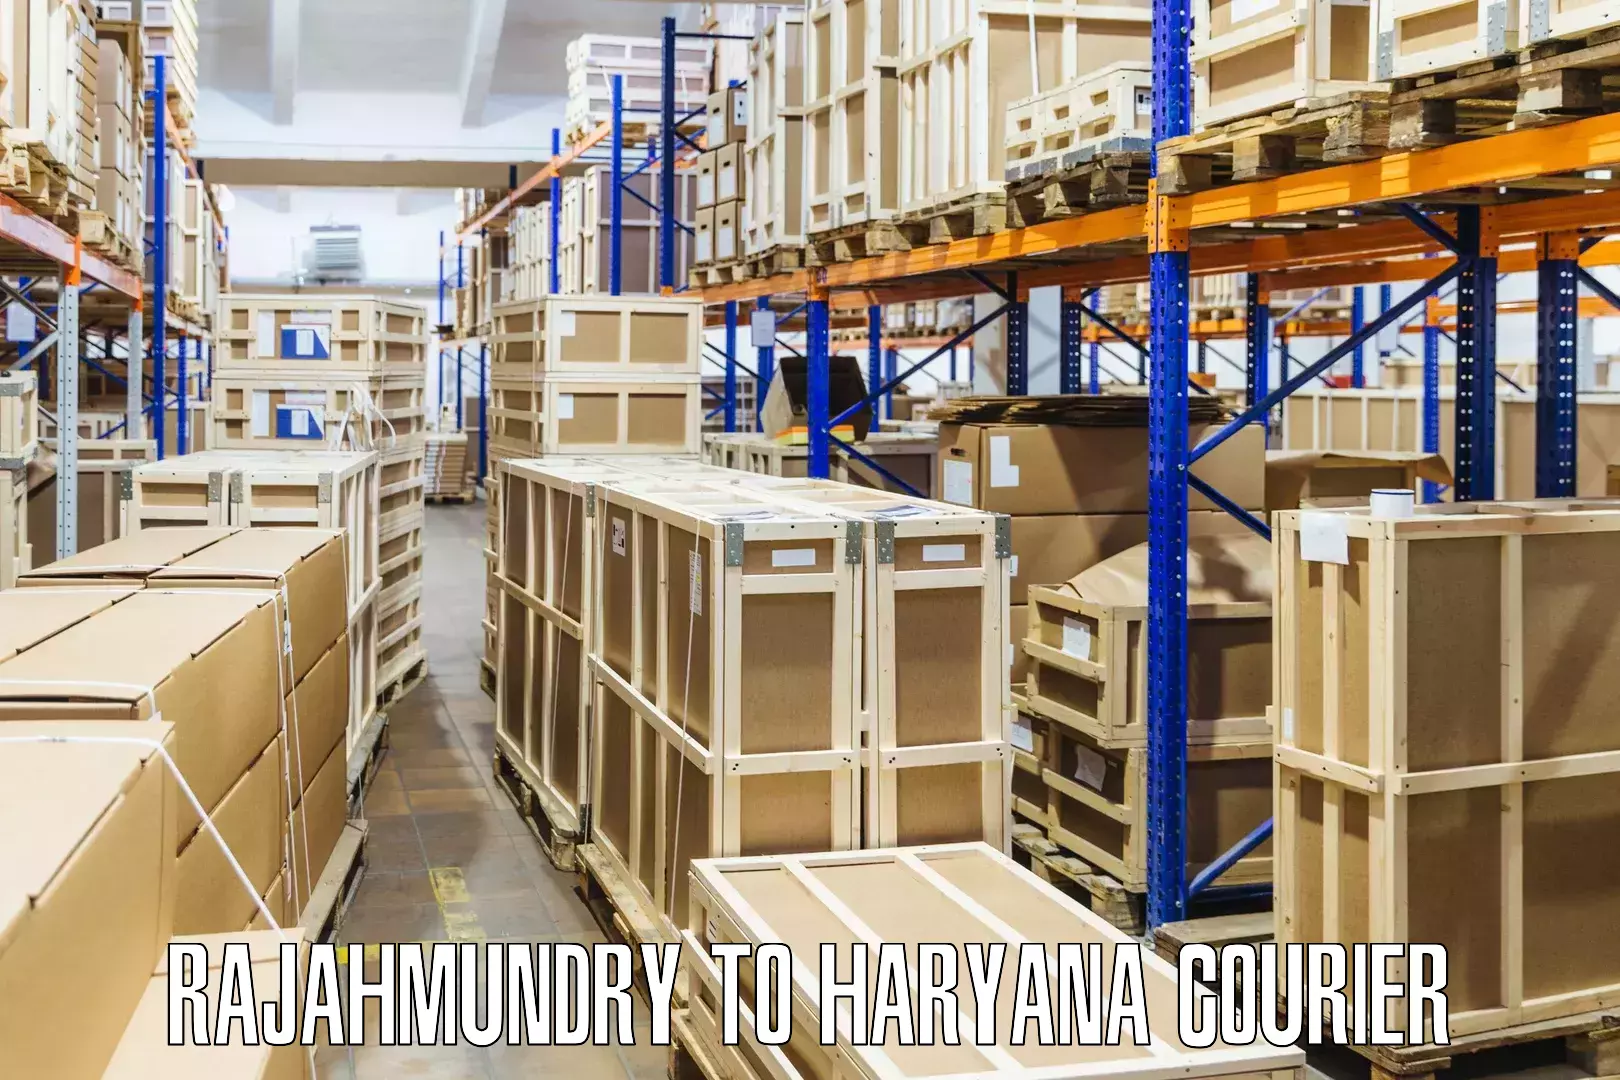 High-priority parcel service Rajahmundry to Narwana